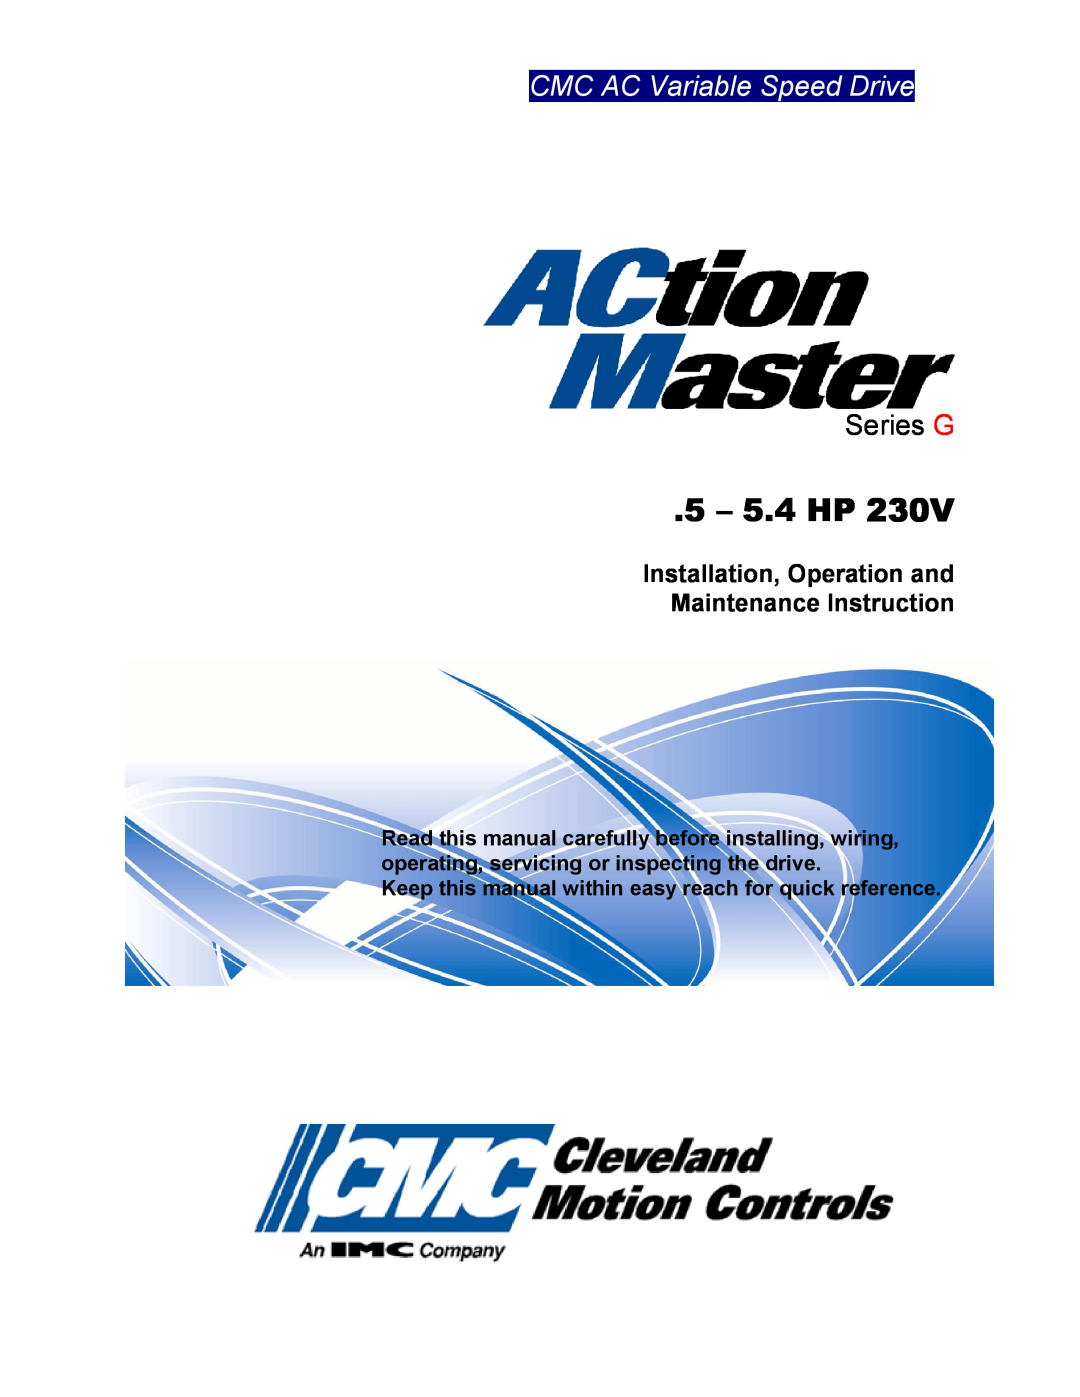 Cleveland Range inverter manual 5 - 5.4 HP, Installation, Operation and, Maintenance Instruction, Series G 